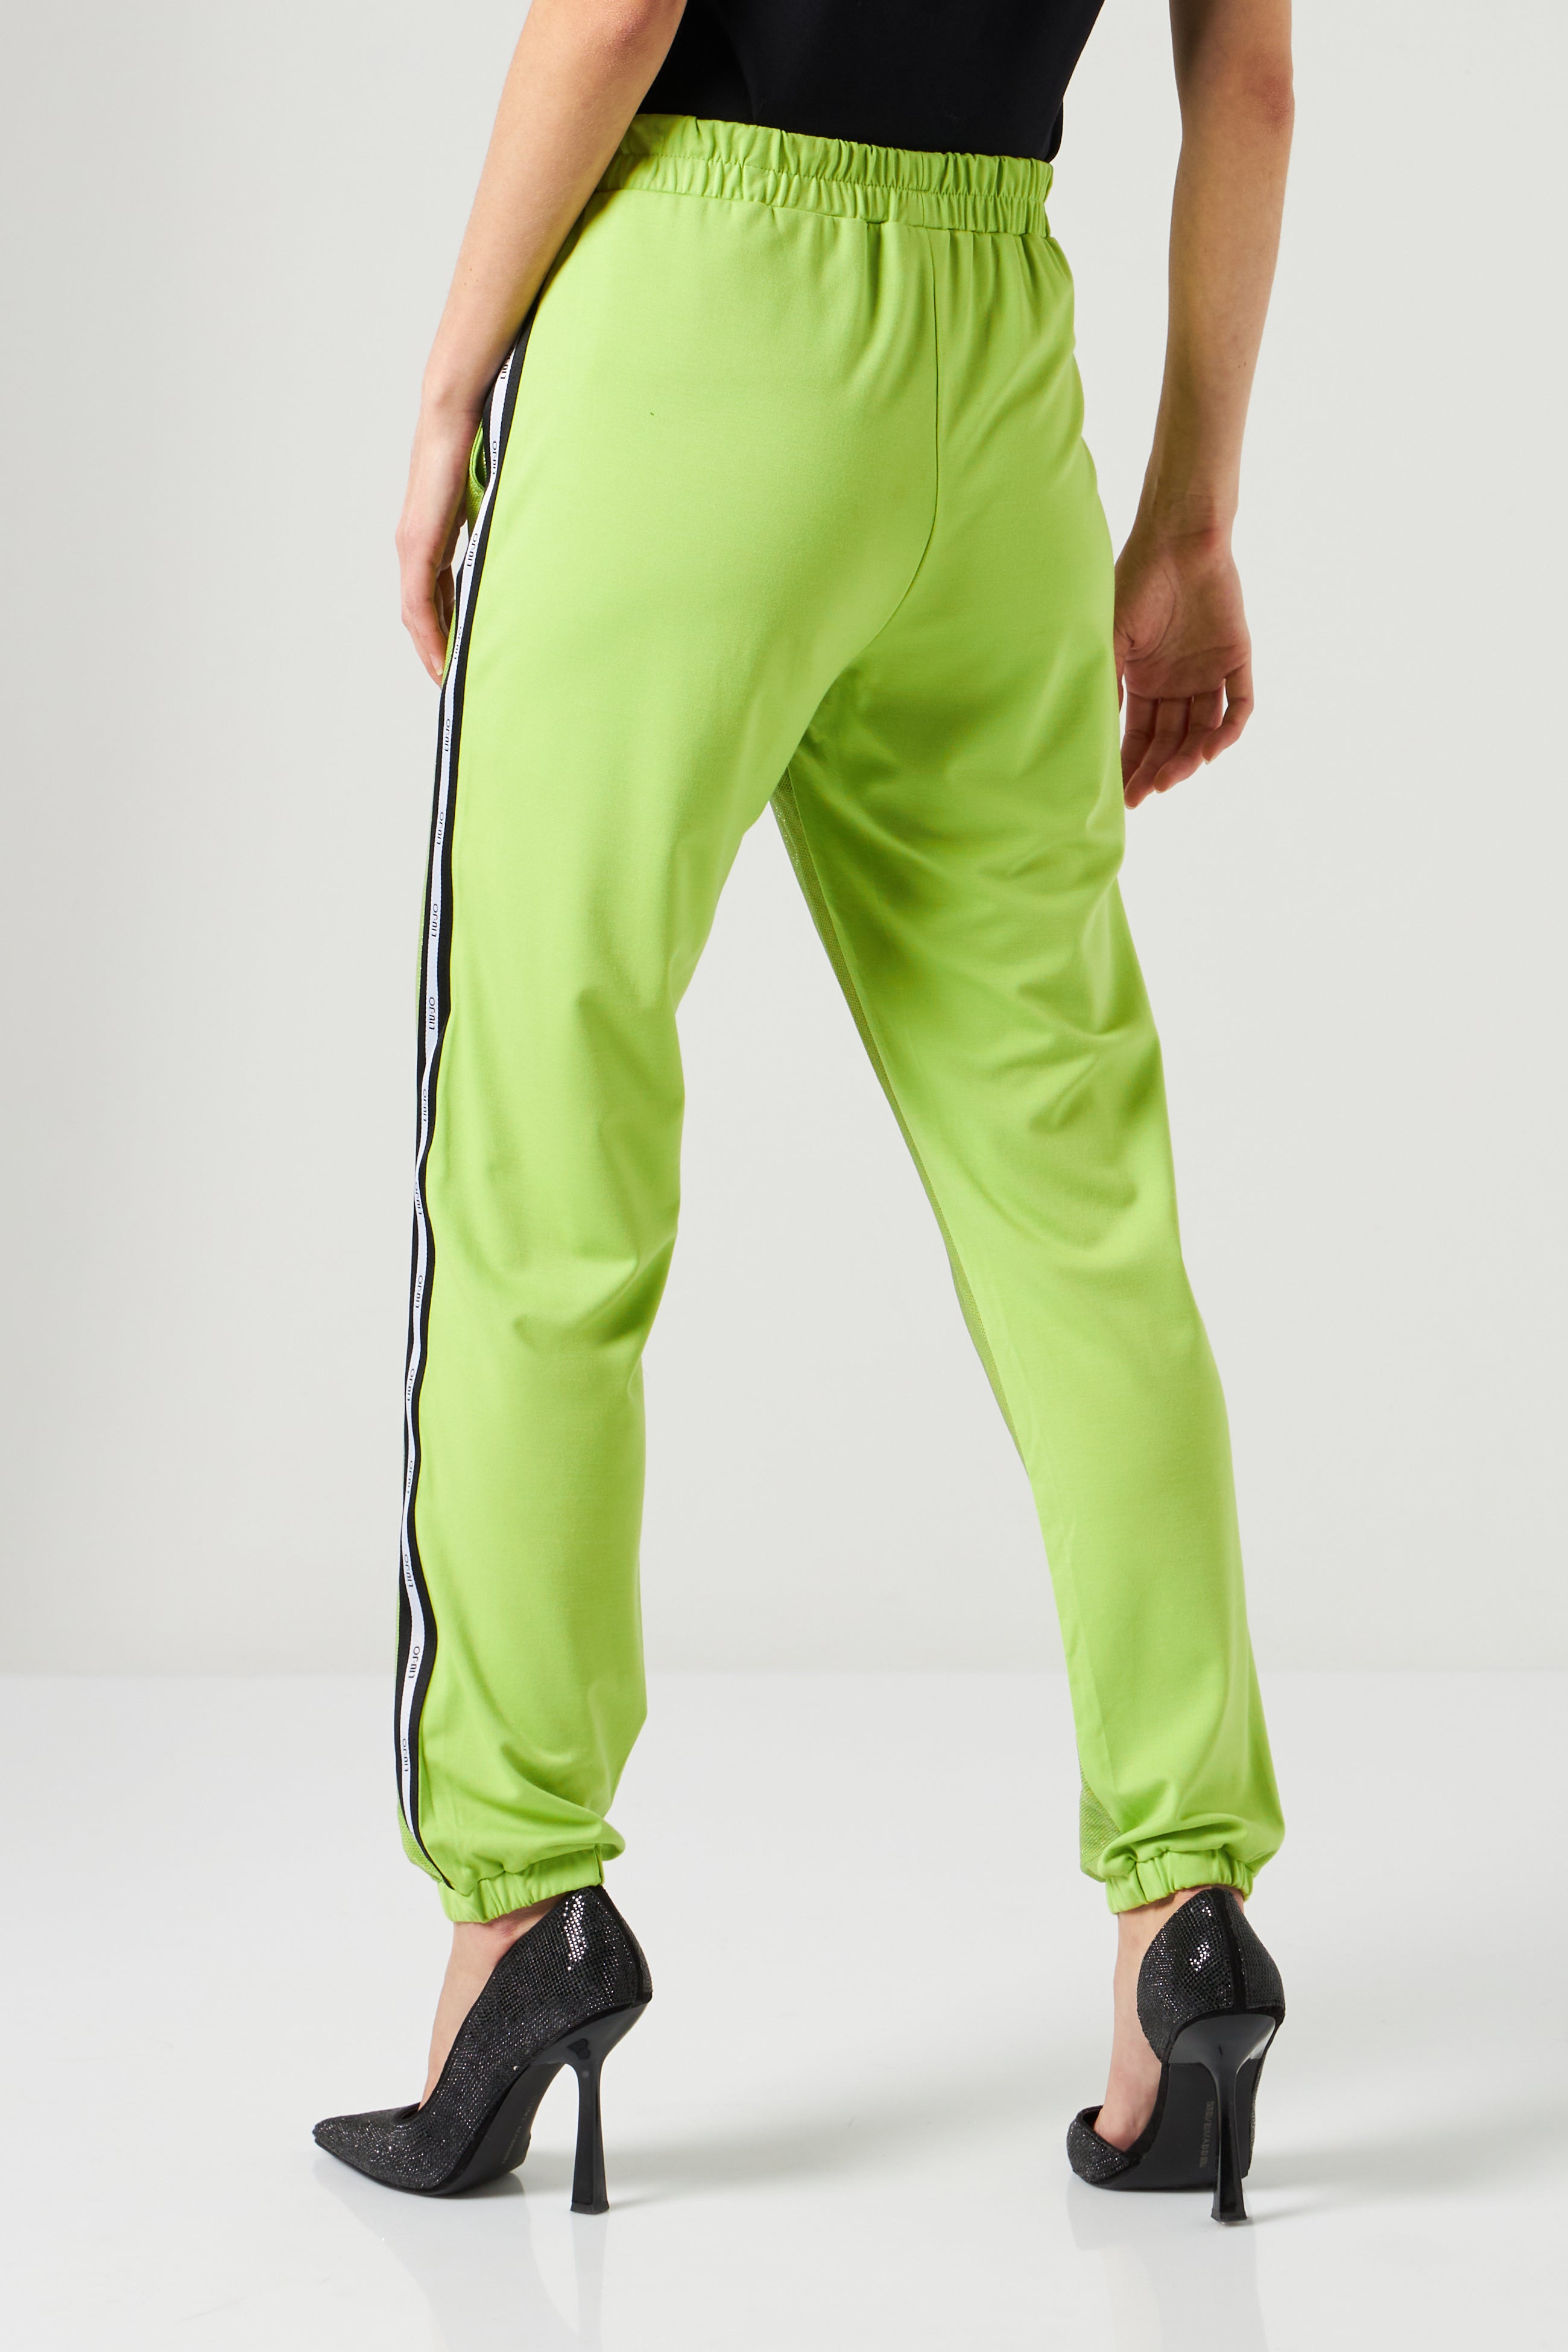 LIU JO Green Jersey Pants